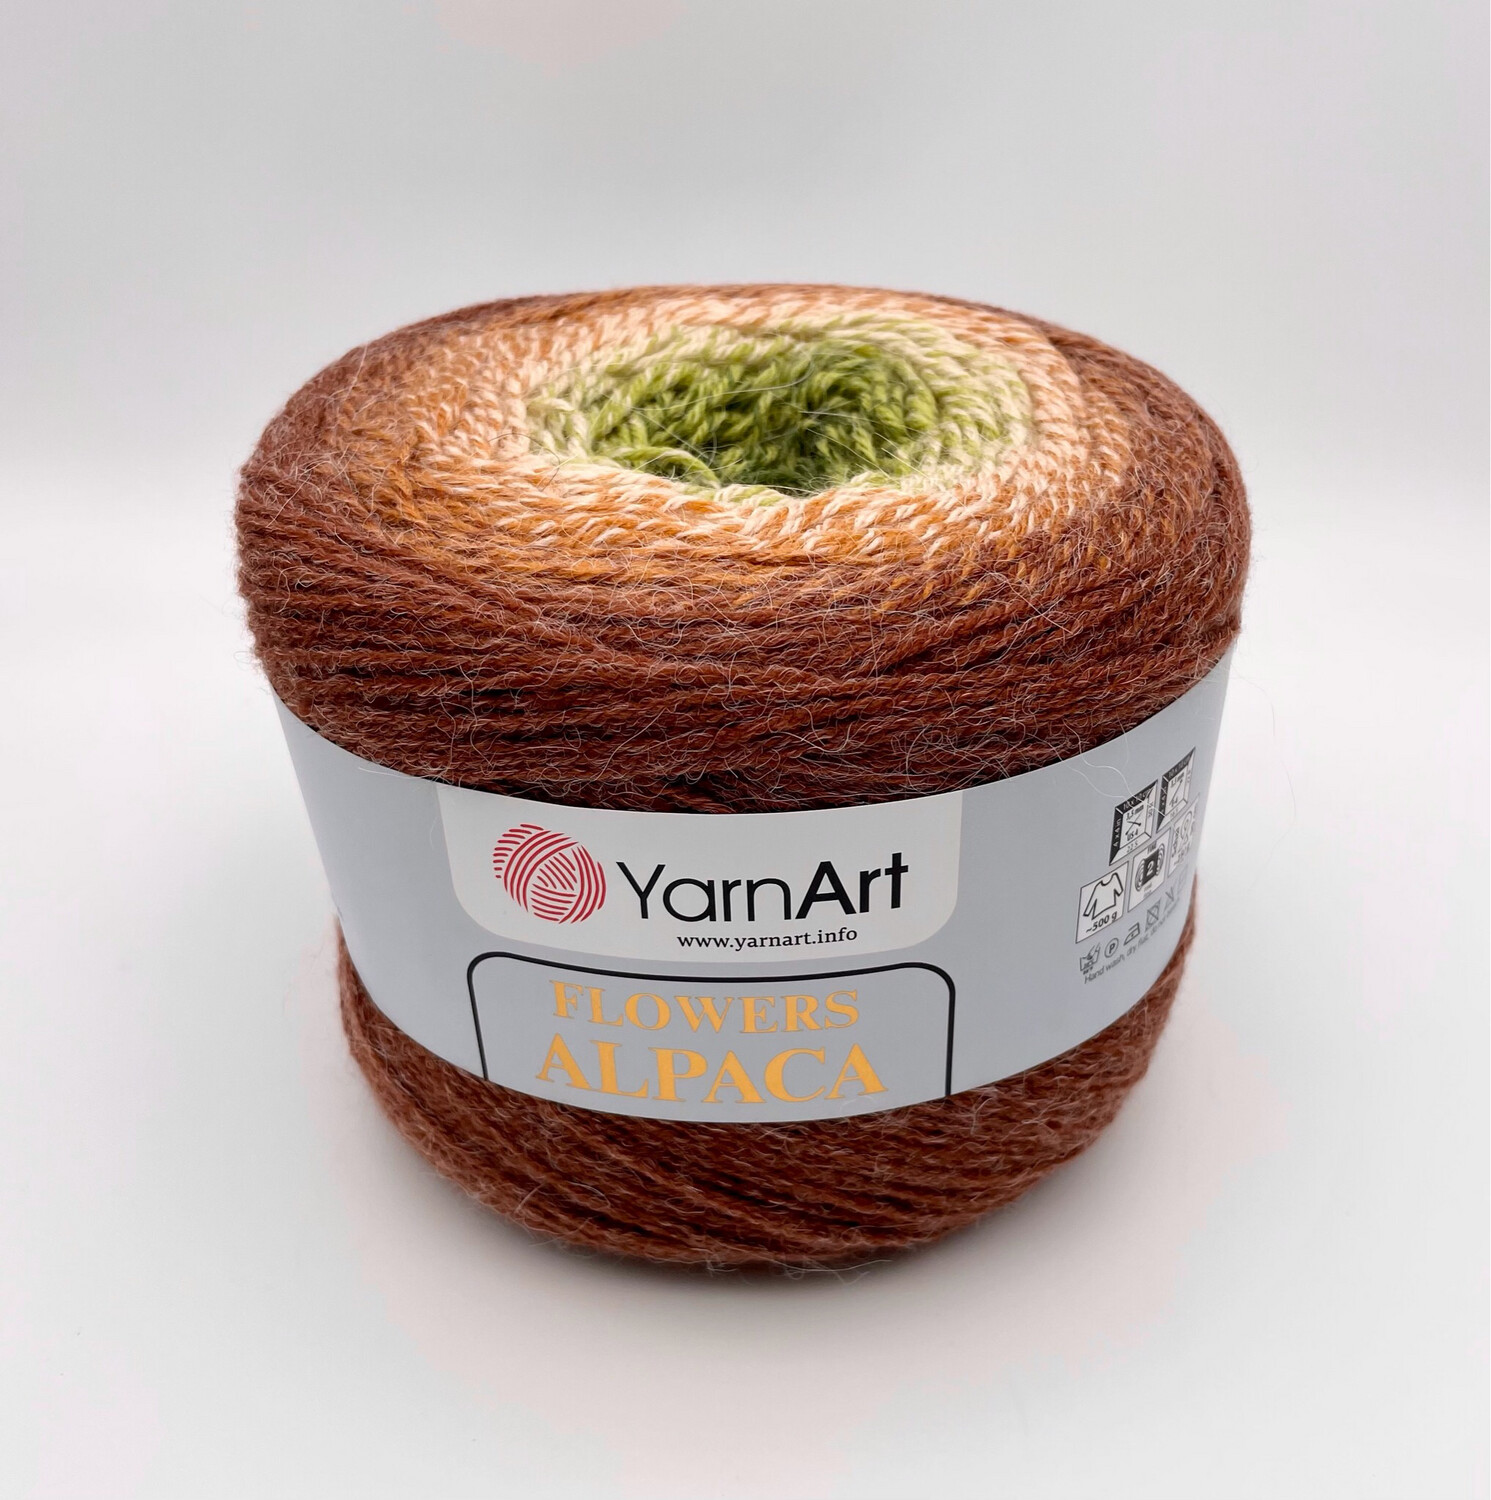 YarnArt Flowers Alpaca - 425